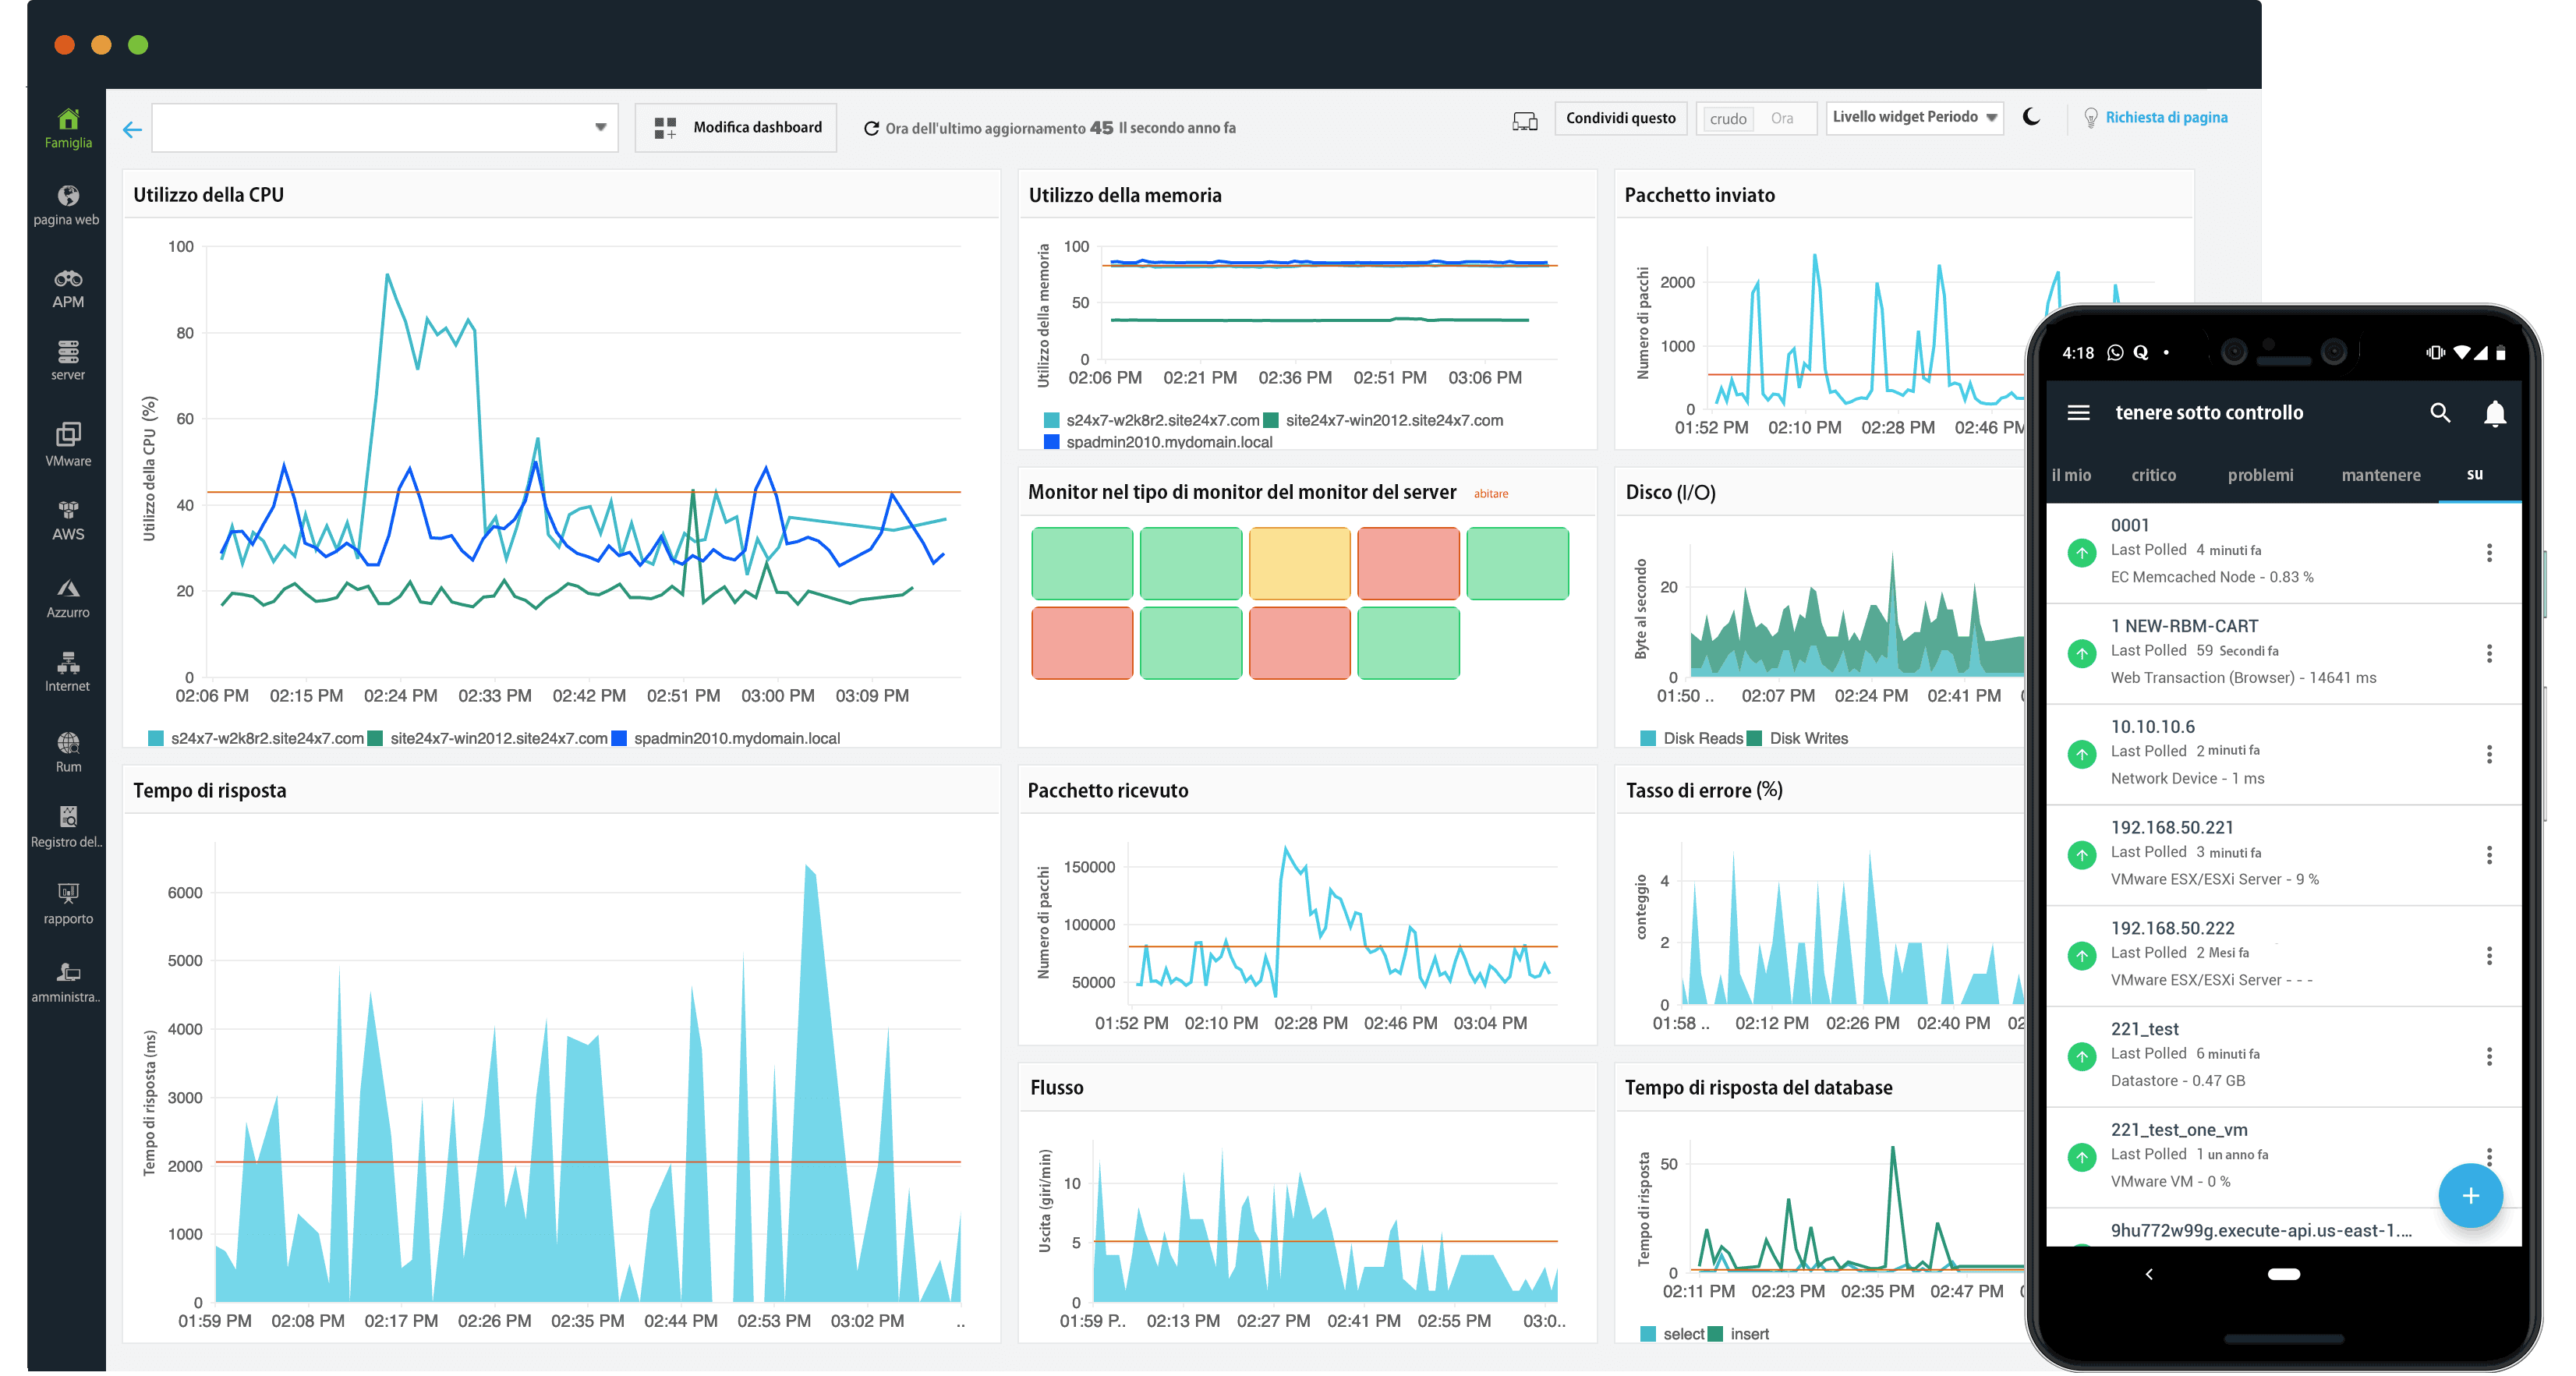 A custom dashboard displaying multiple metrics as time-series graphs